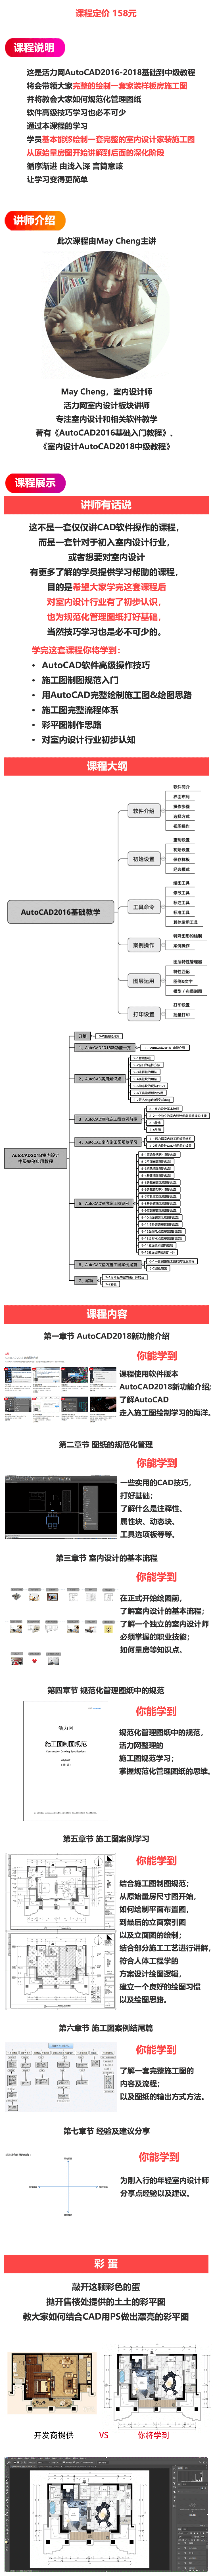 AutoCAD2016-2018零基础入门教程